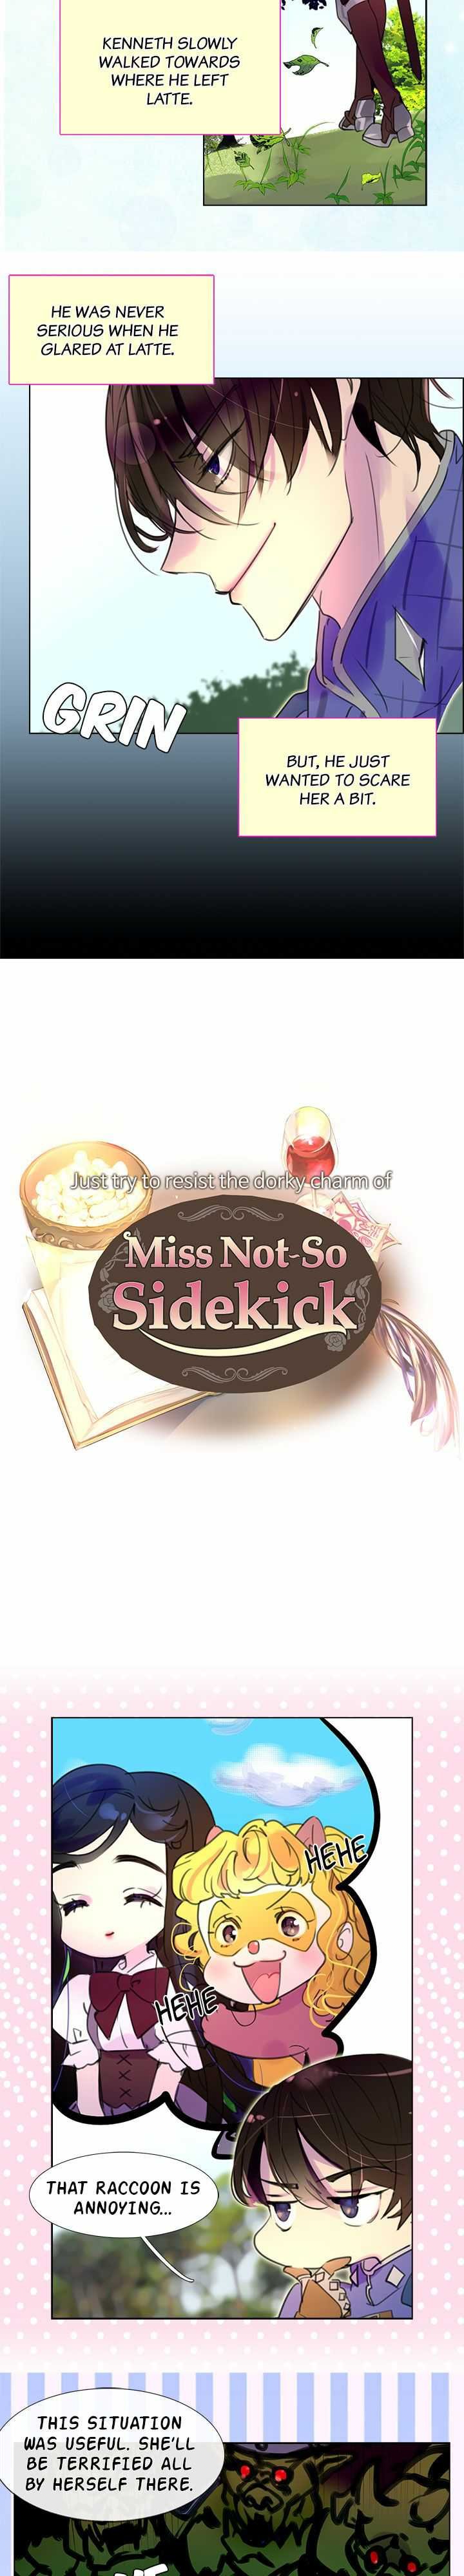 Miss Not-So Sidekick Chapter 21 - Page 2